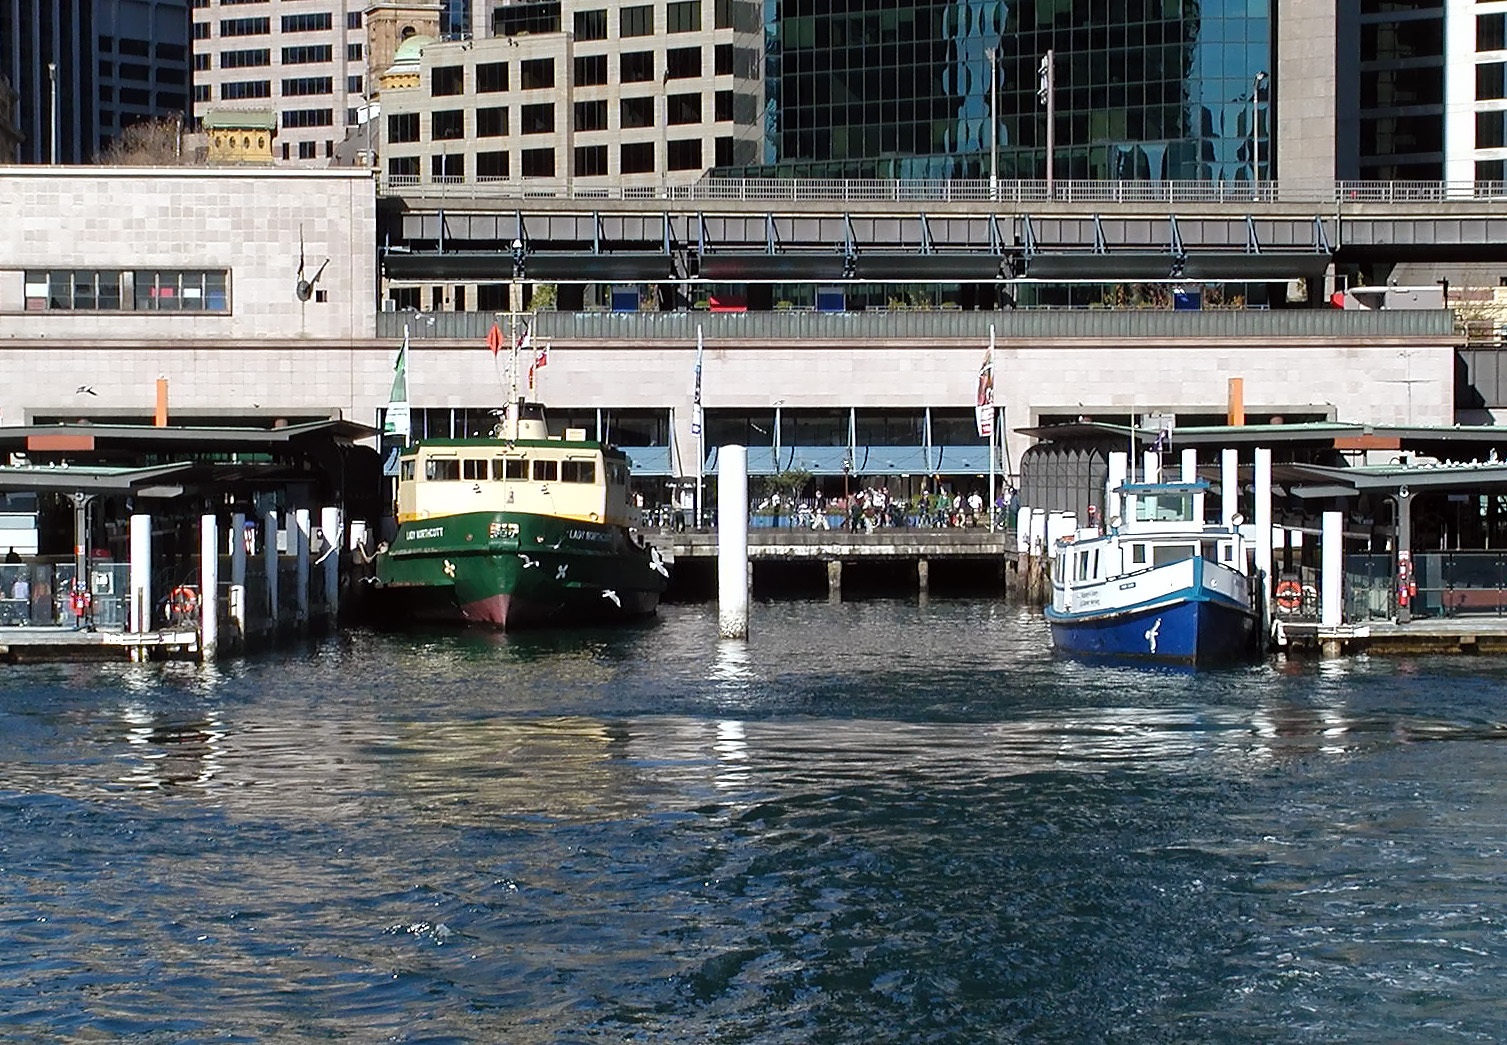 17-Jun-2001 10:06 - Sydney - Leaving Circular Quay